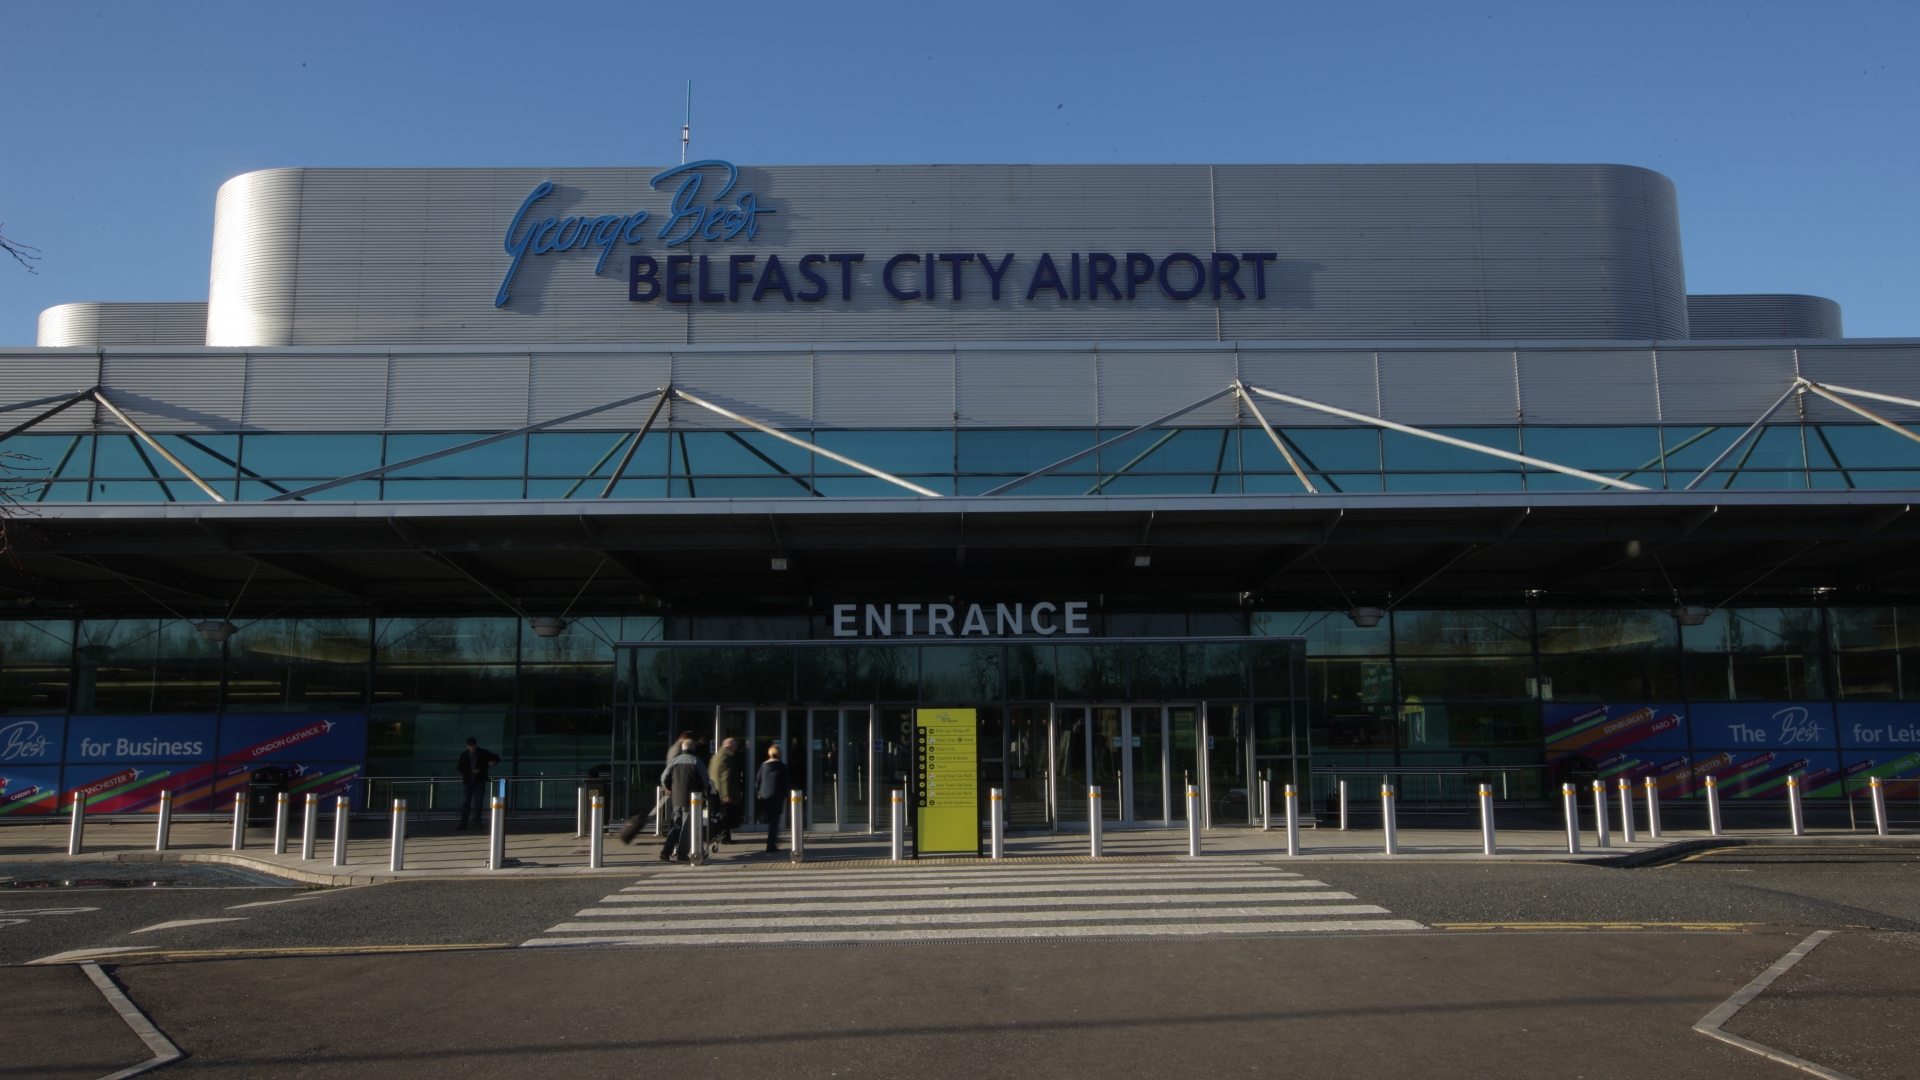 George-Best-Belfast-City-Airport_1557854